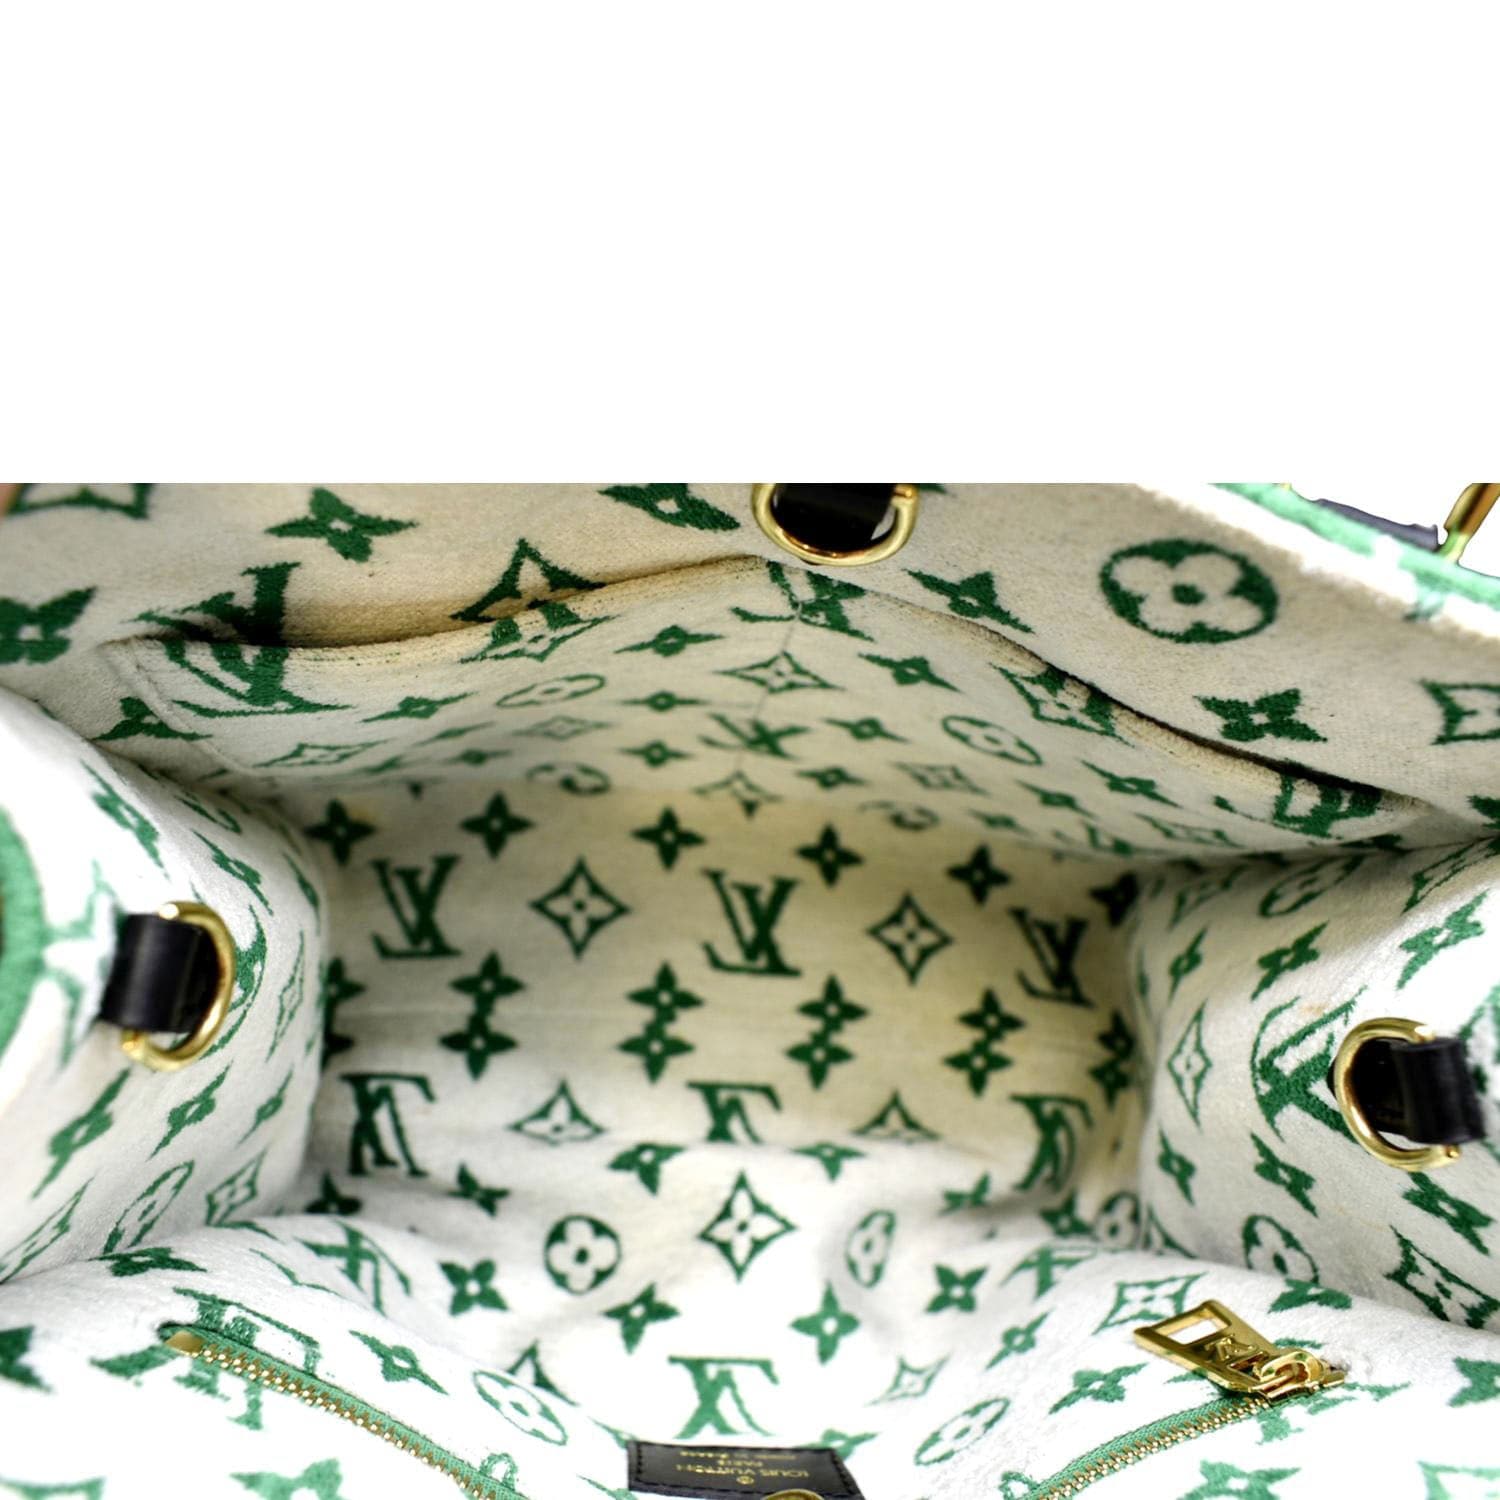 Louis+Vuitton+OnTheGo+Tote+PM+Green+Monogram+Velvet for sale